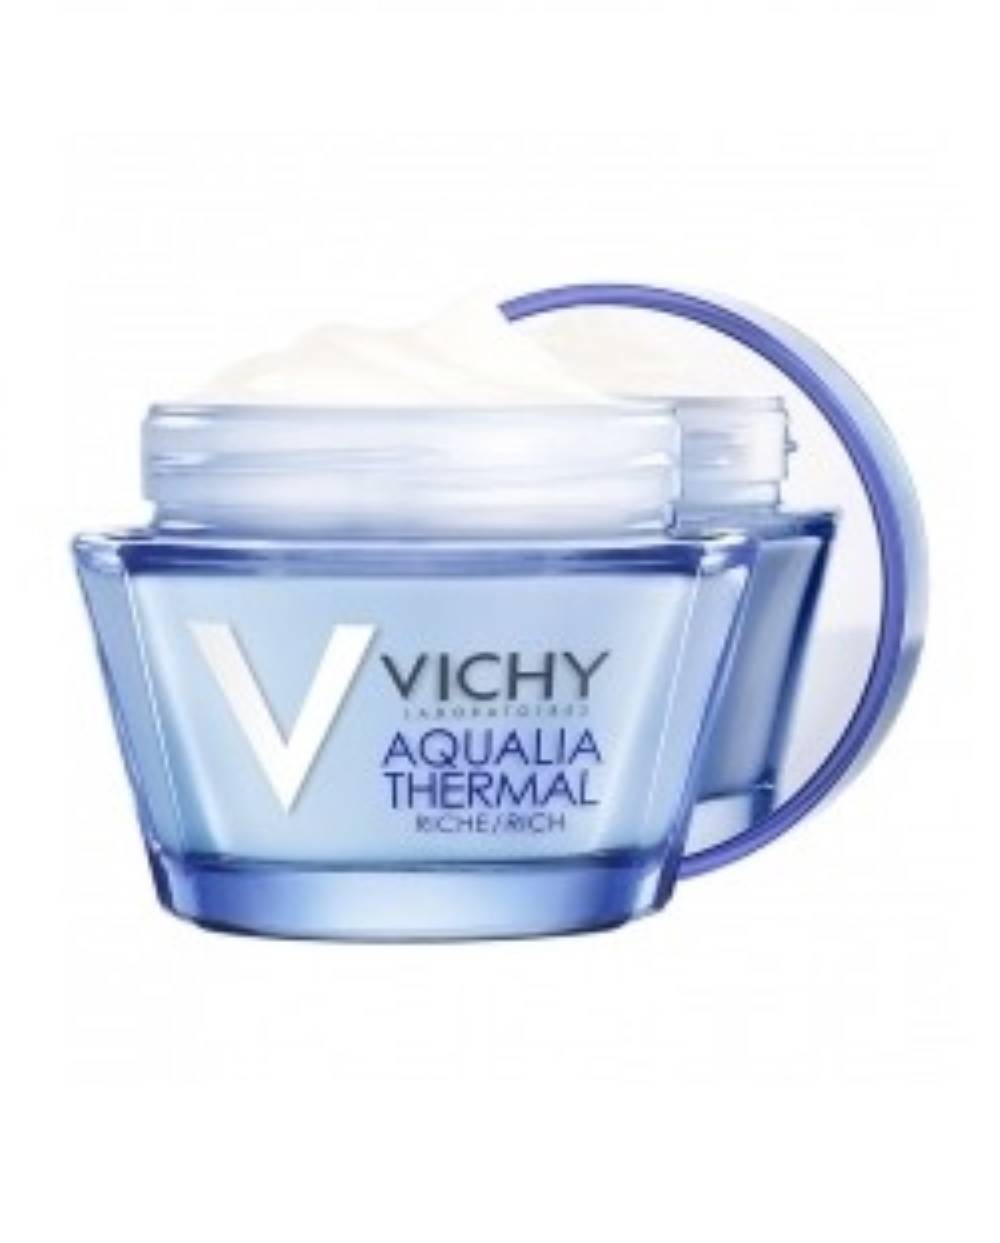 Aqualia thermal crema rica Vichy